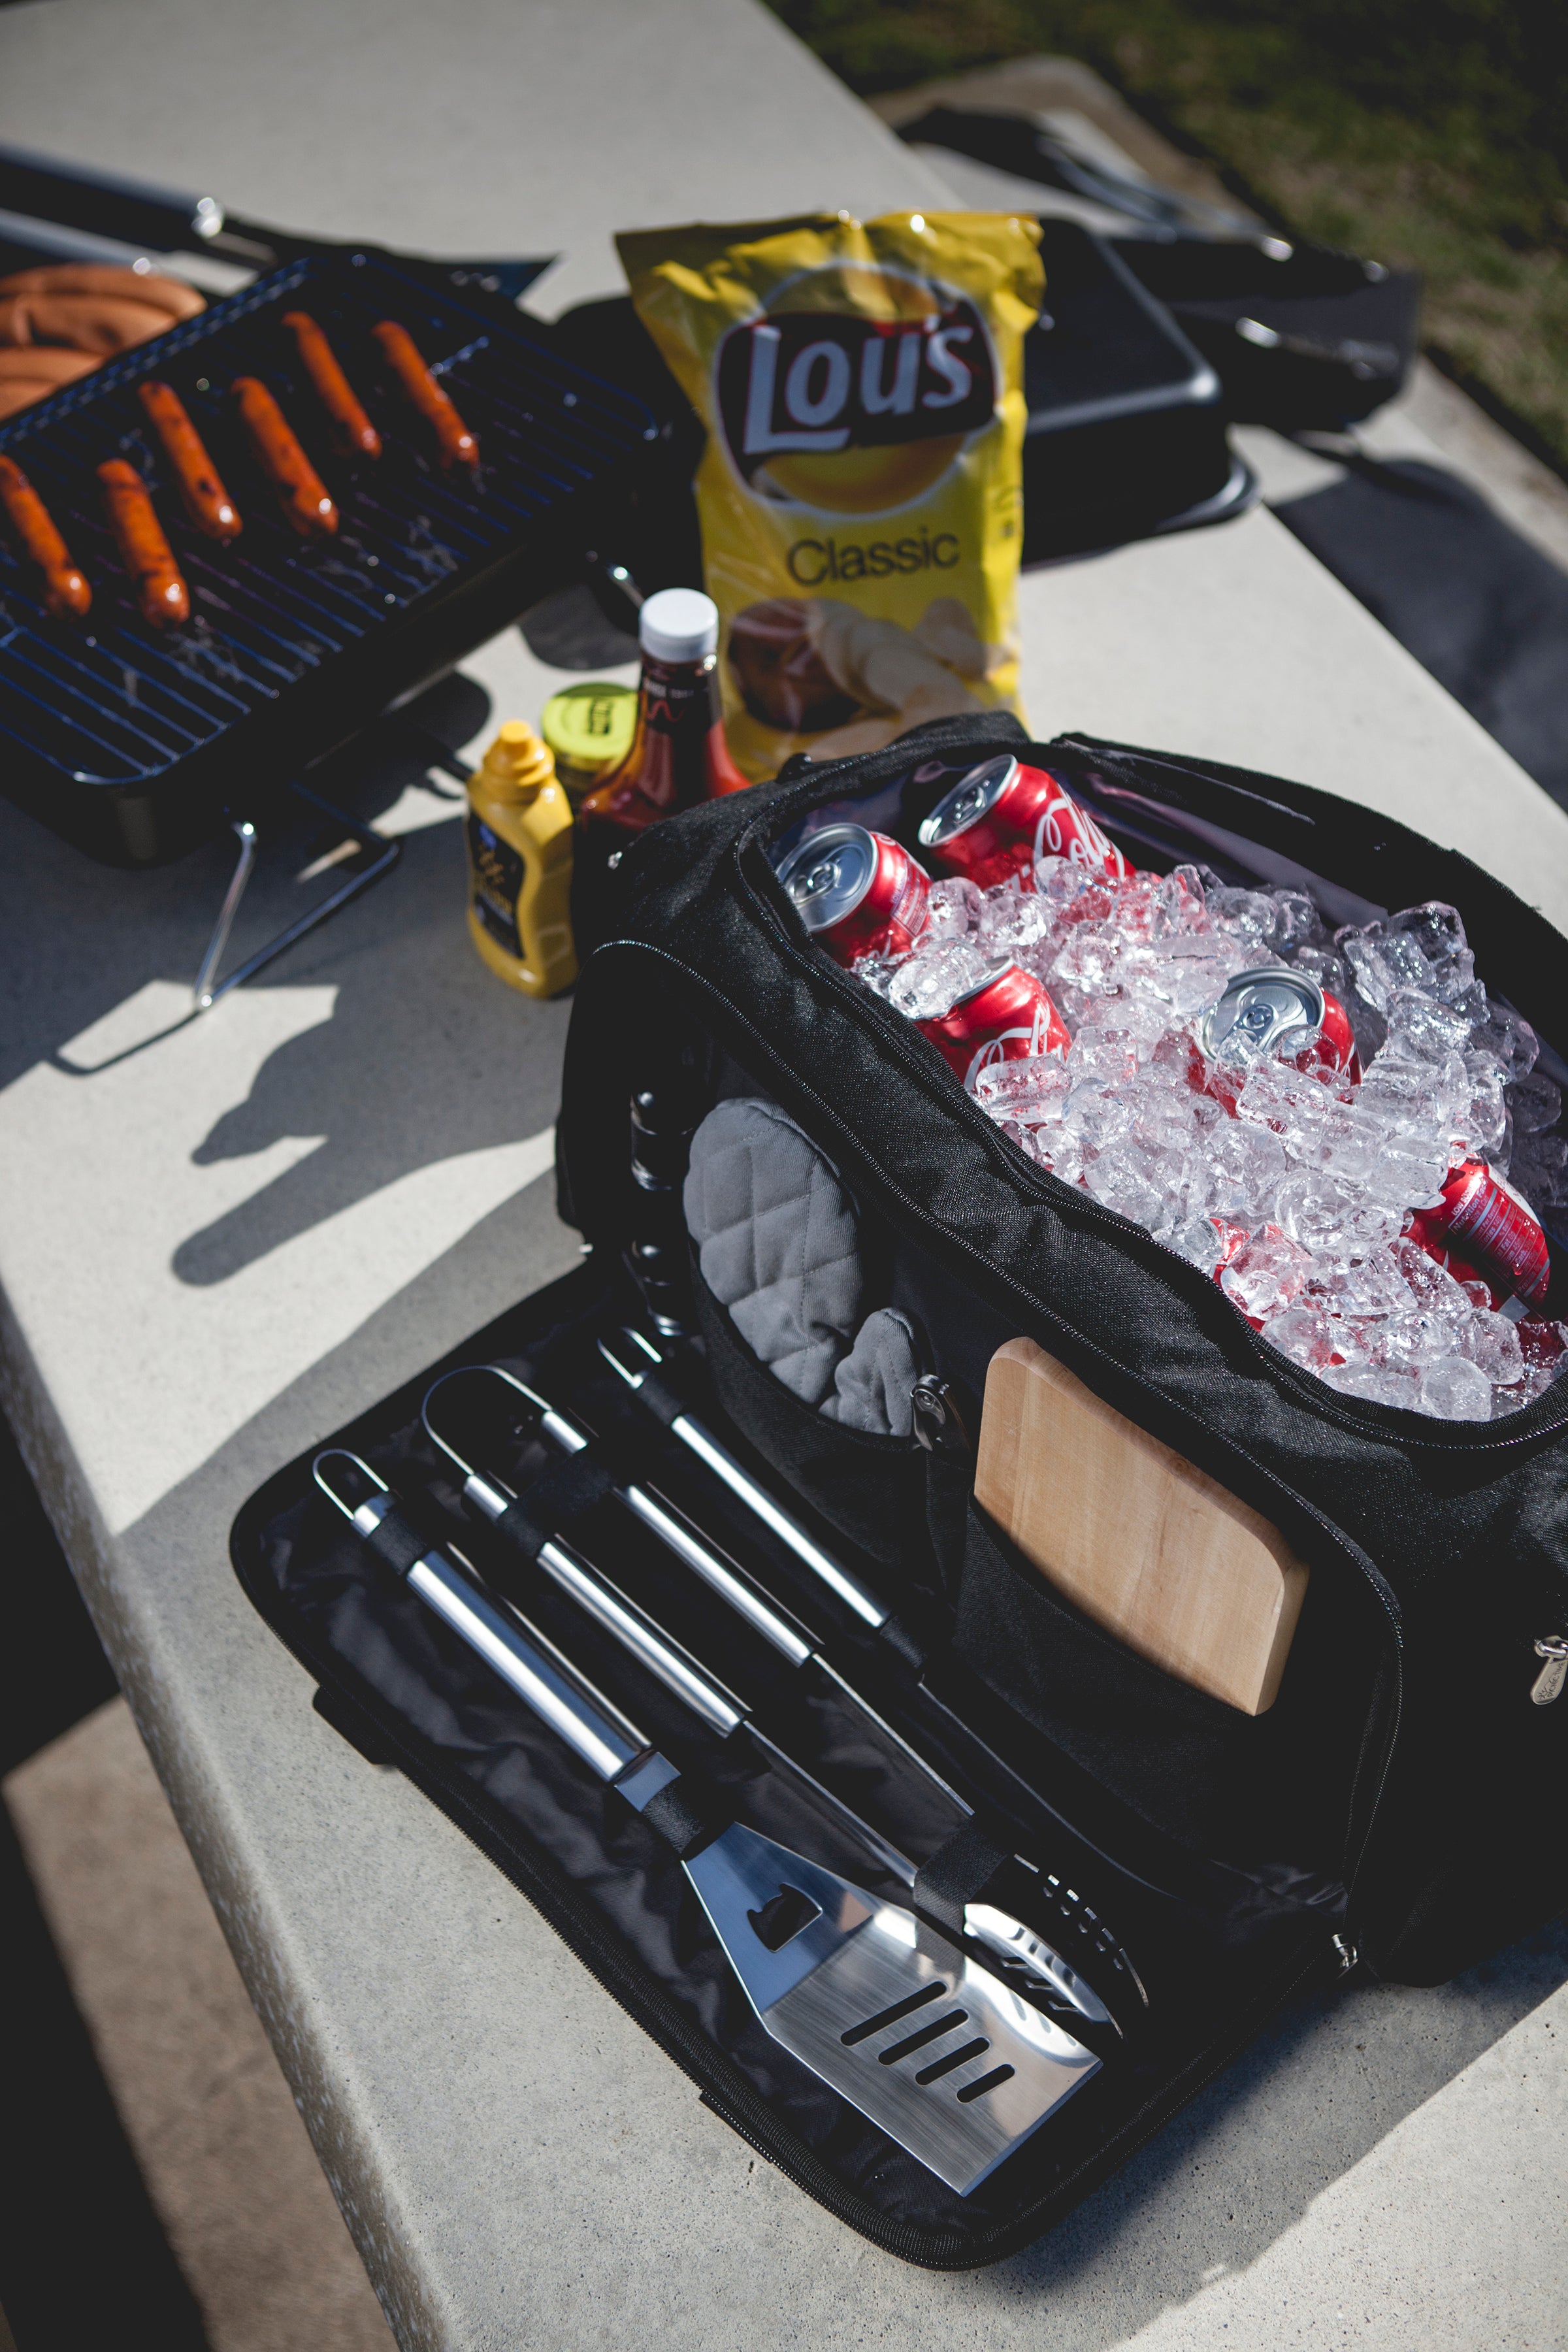 Arkansas Razorbacks - BBQ Kit Grill Set & Cooler